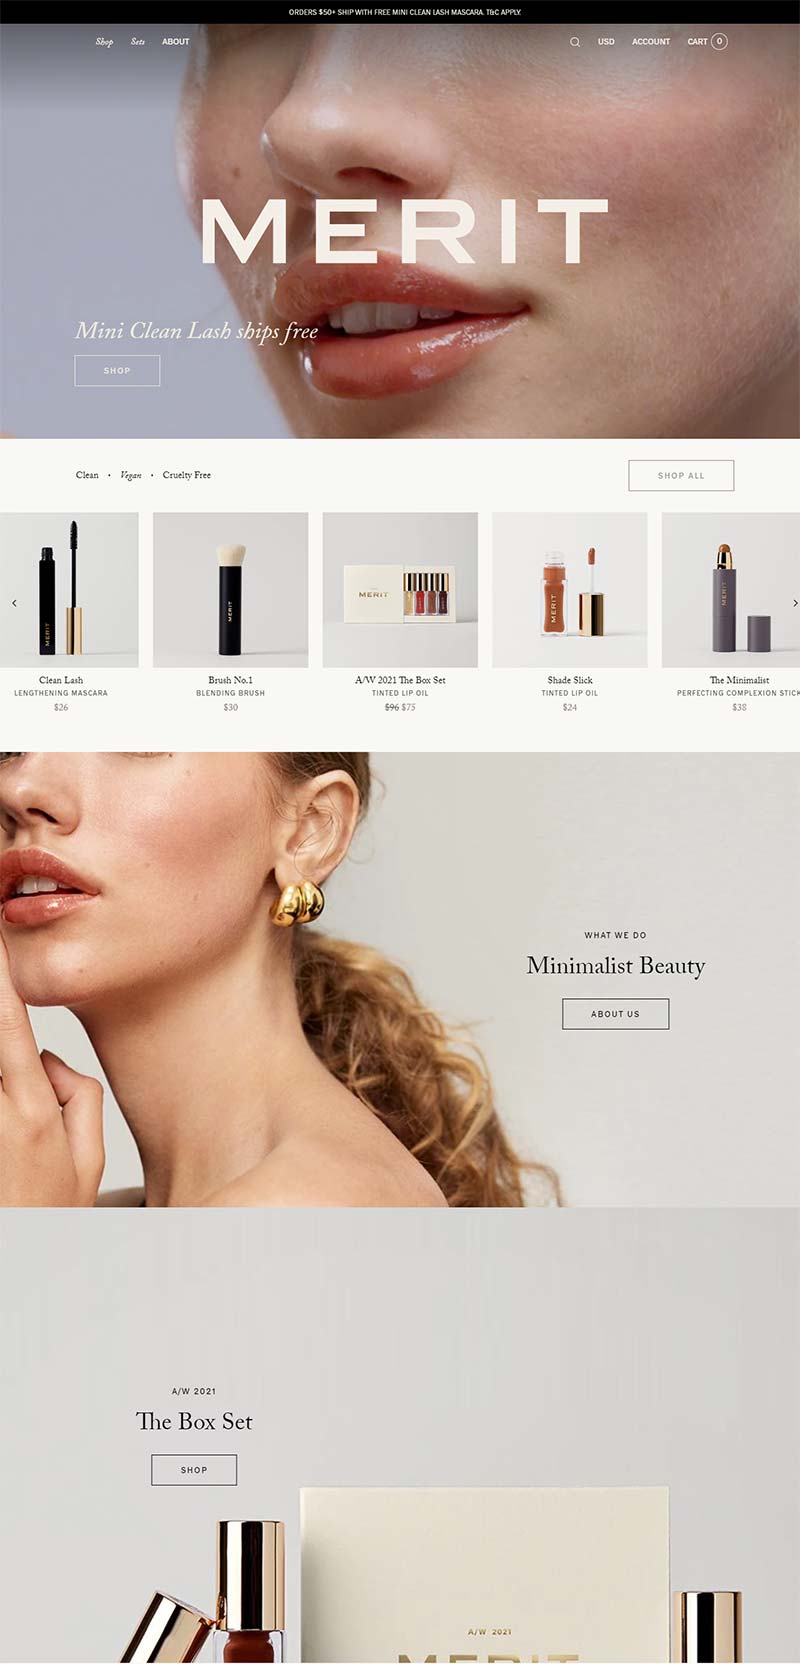 Merit beauty 美国极简彩妆品牌购物网站